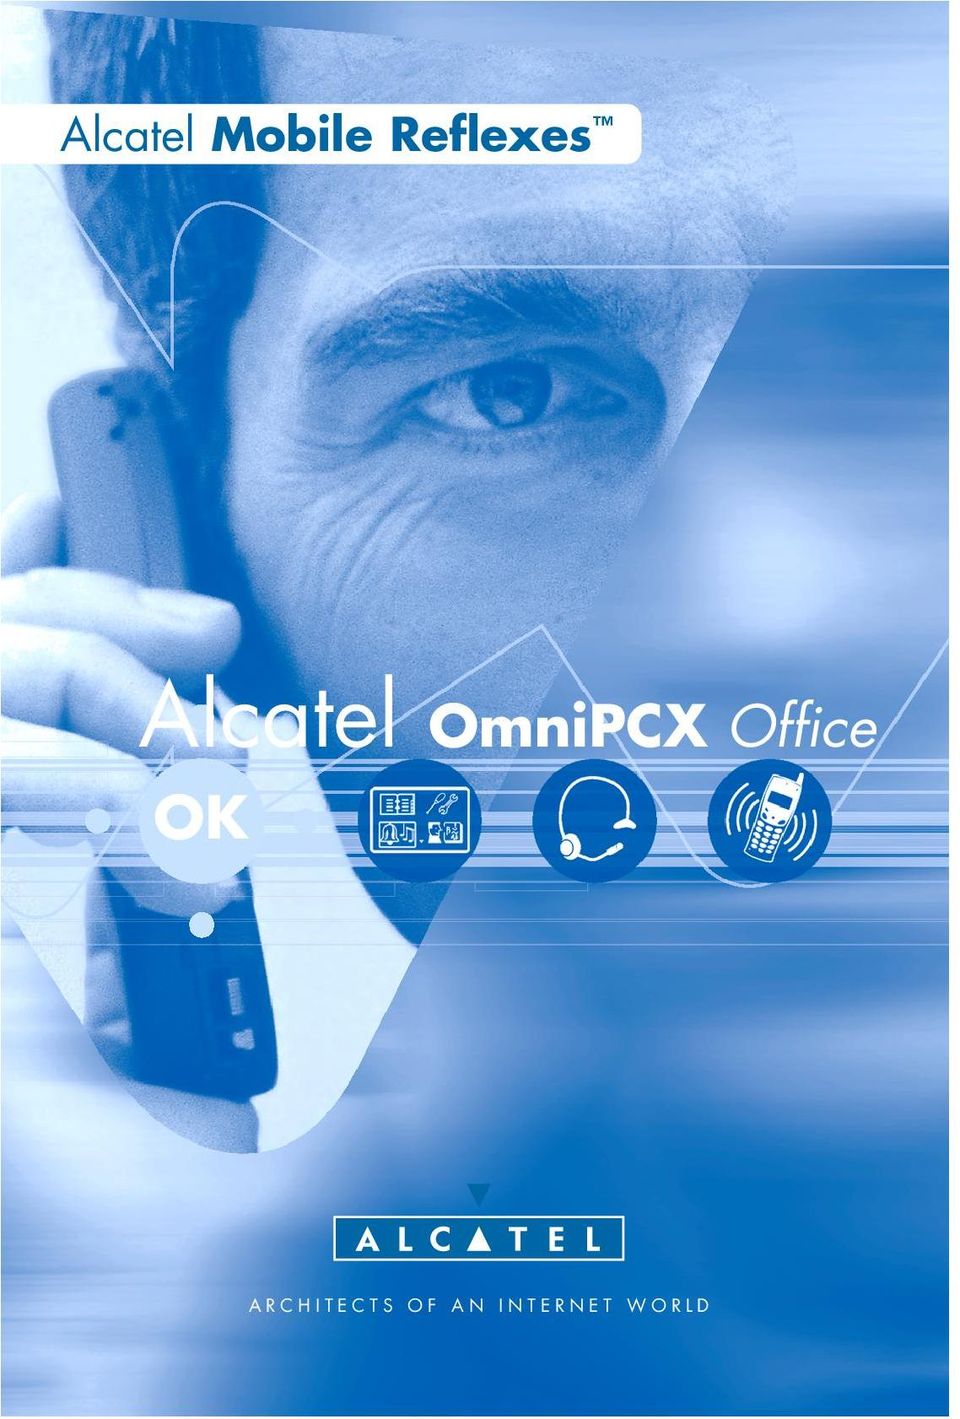 OmniPCX Office OK